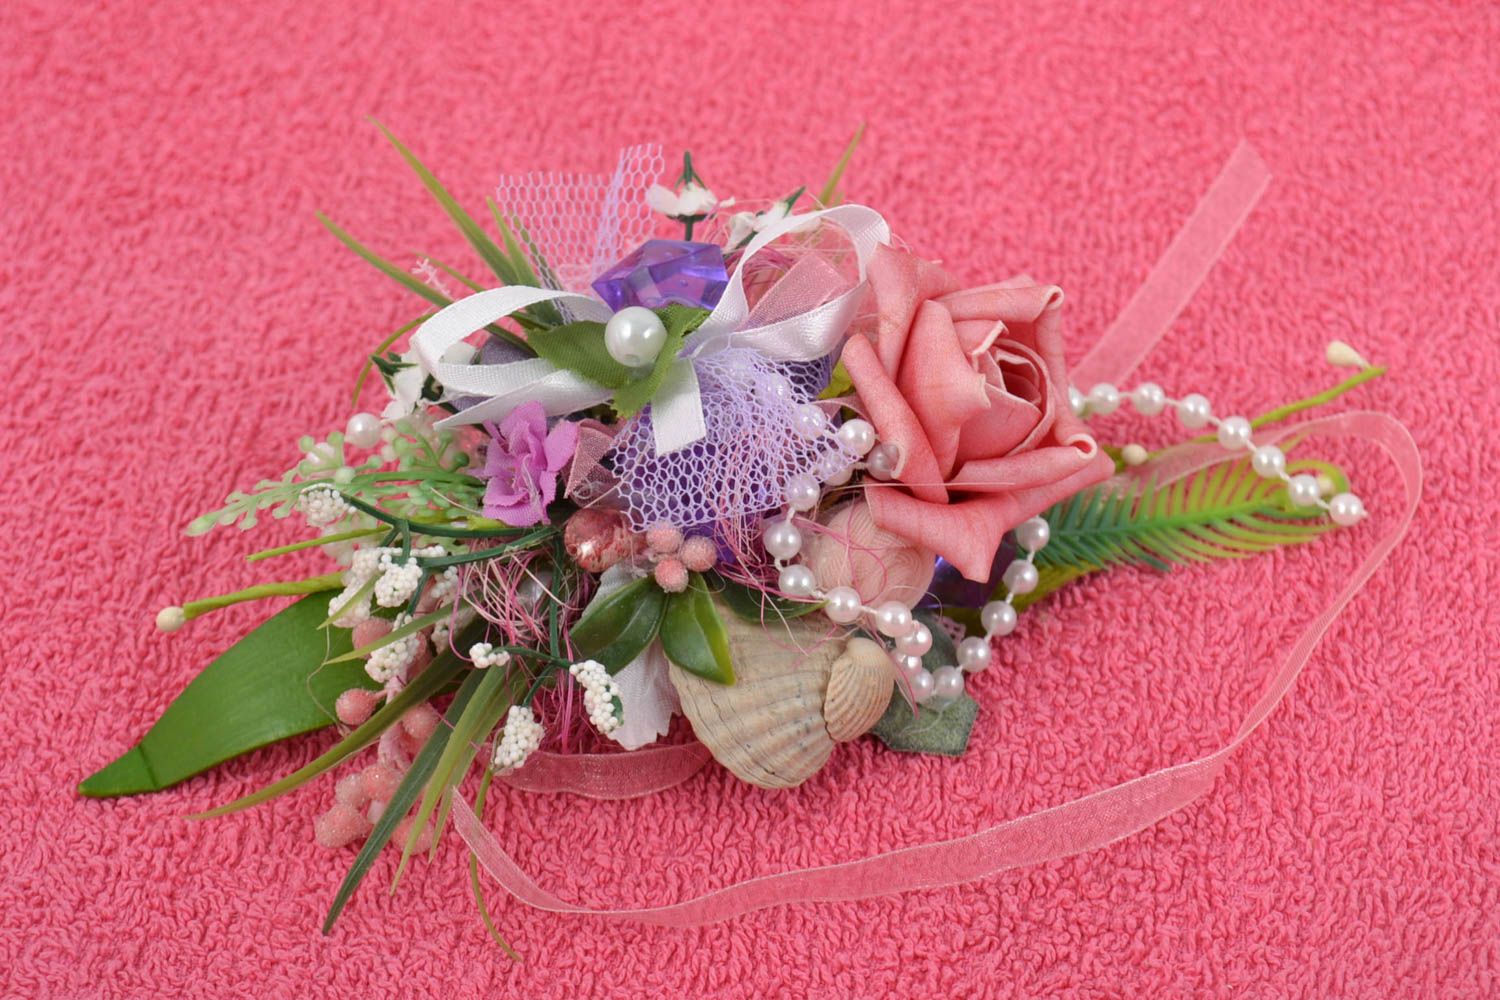 Handmade wedding boutonniere stylish wedding accessory flower bride jewelry photo 1